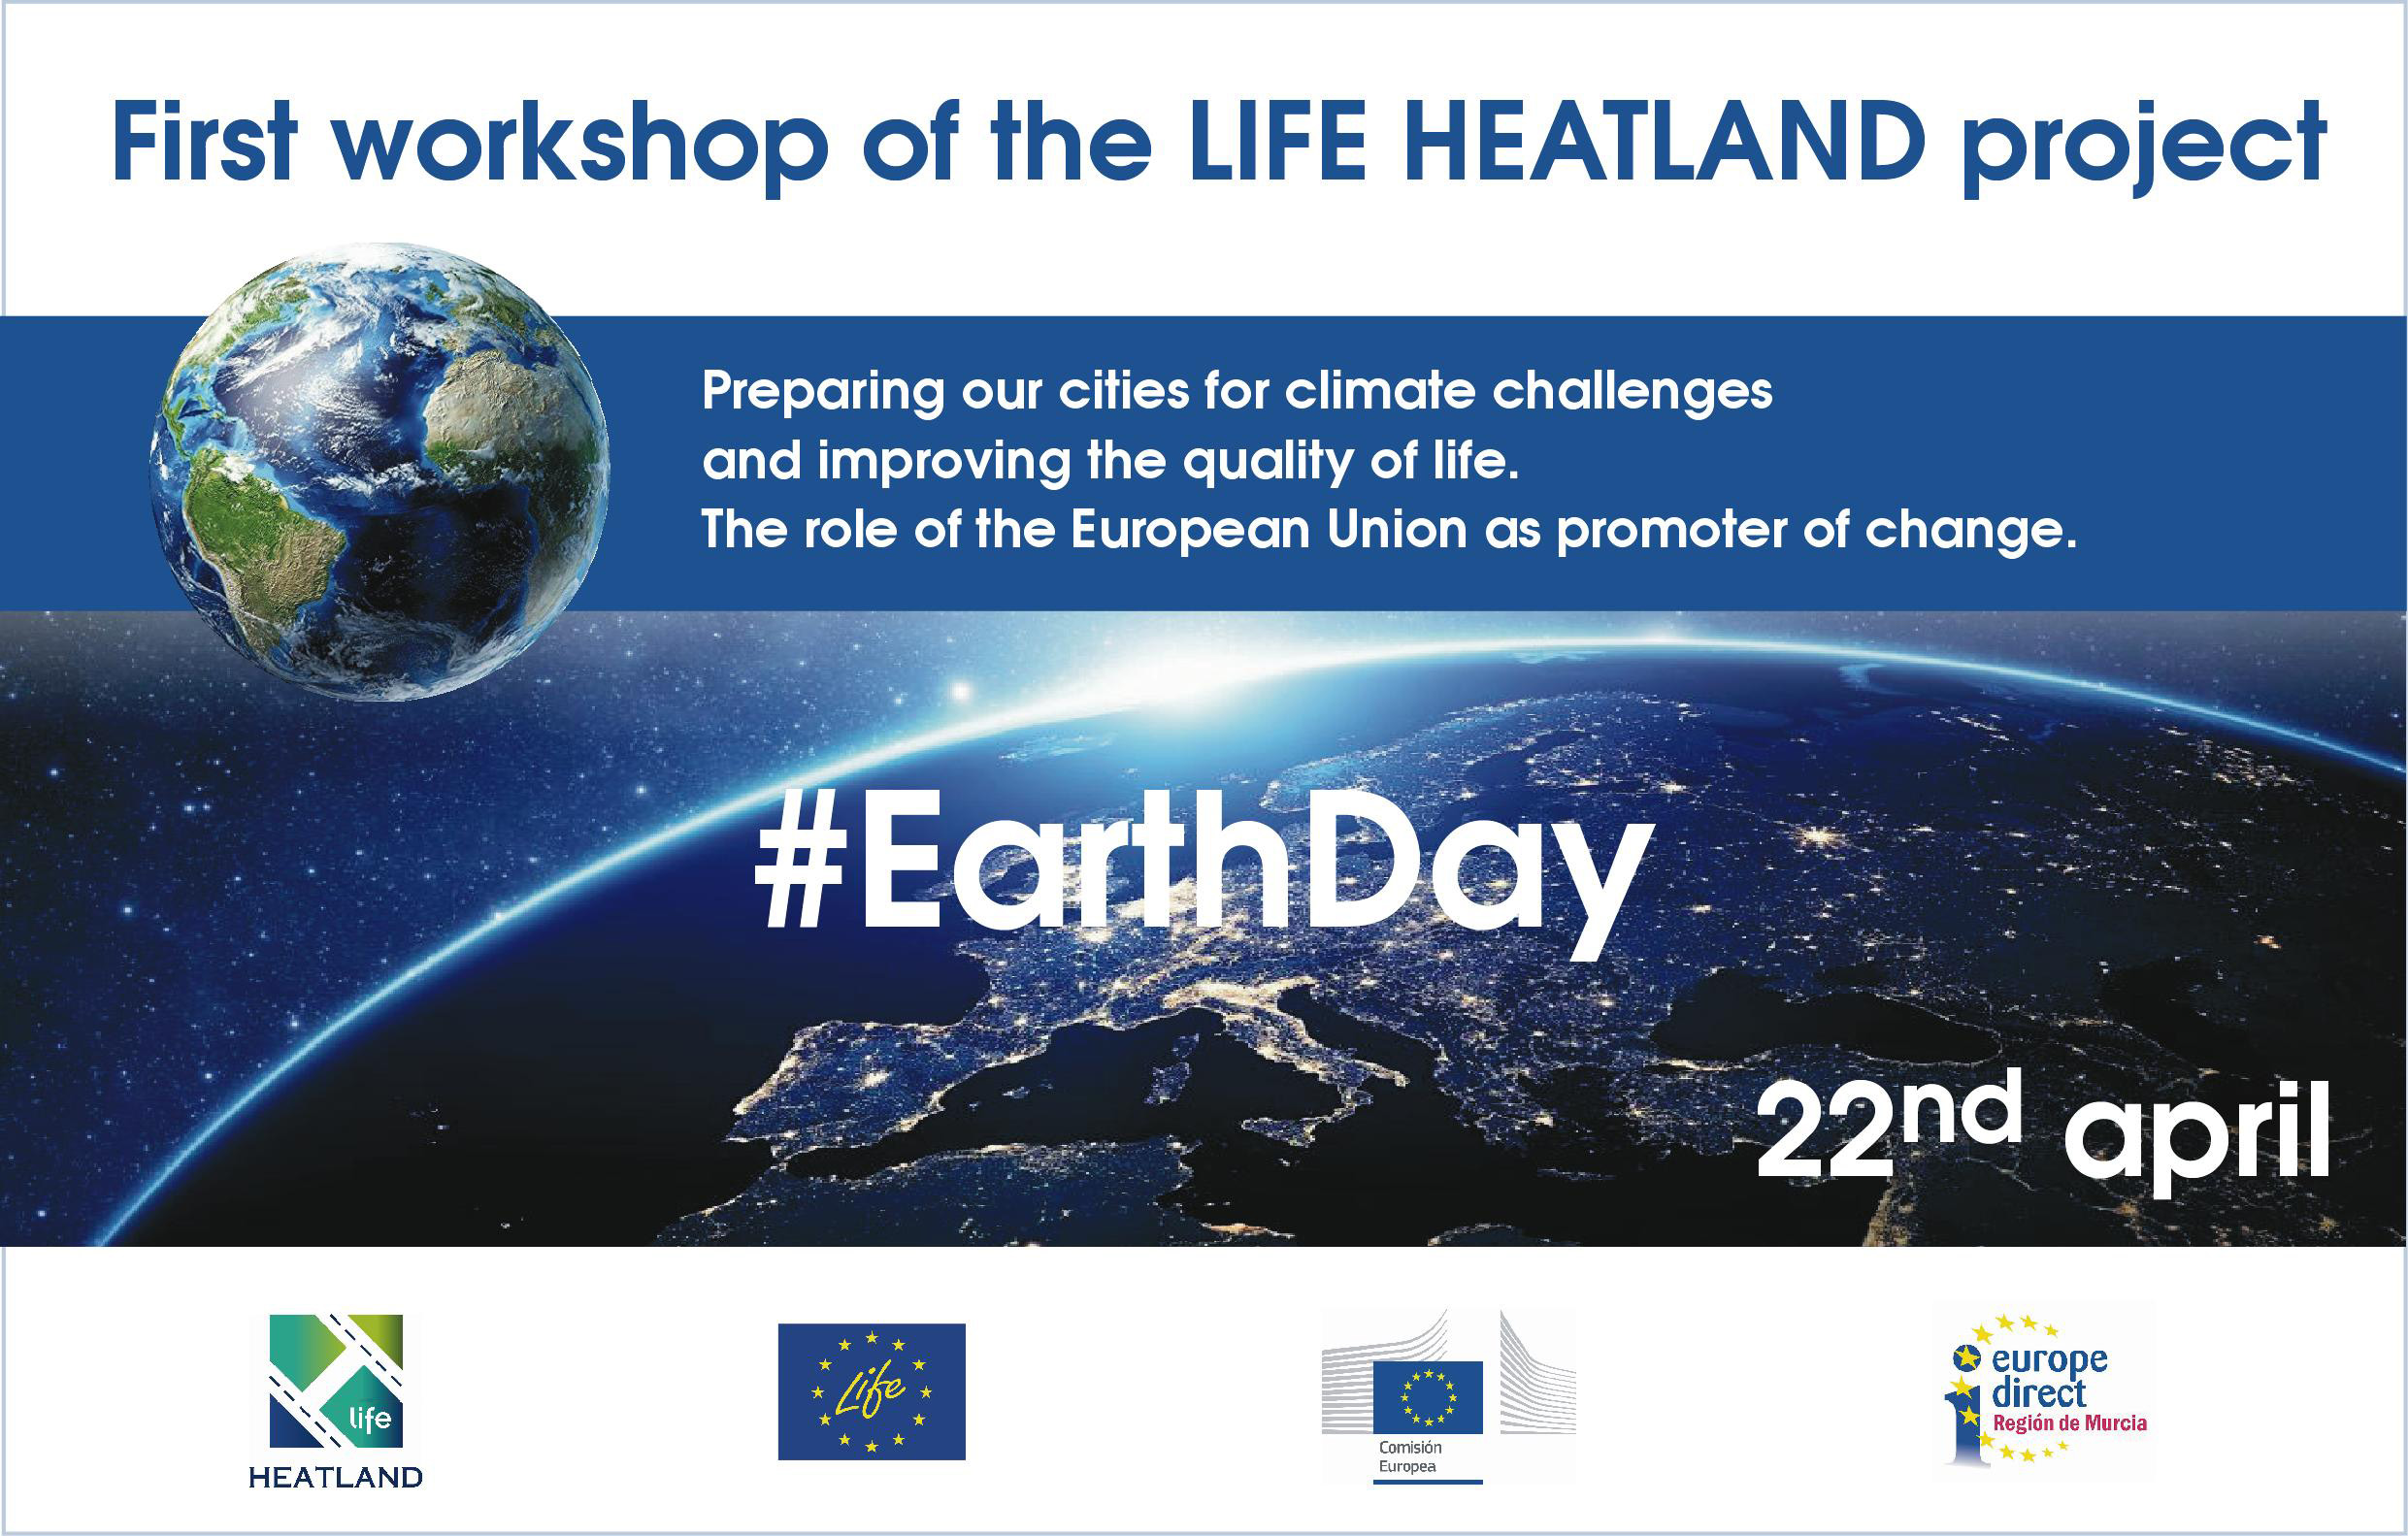 LIFE HEATLAND climate webinar on #earthday